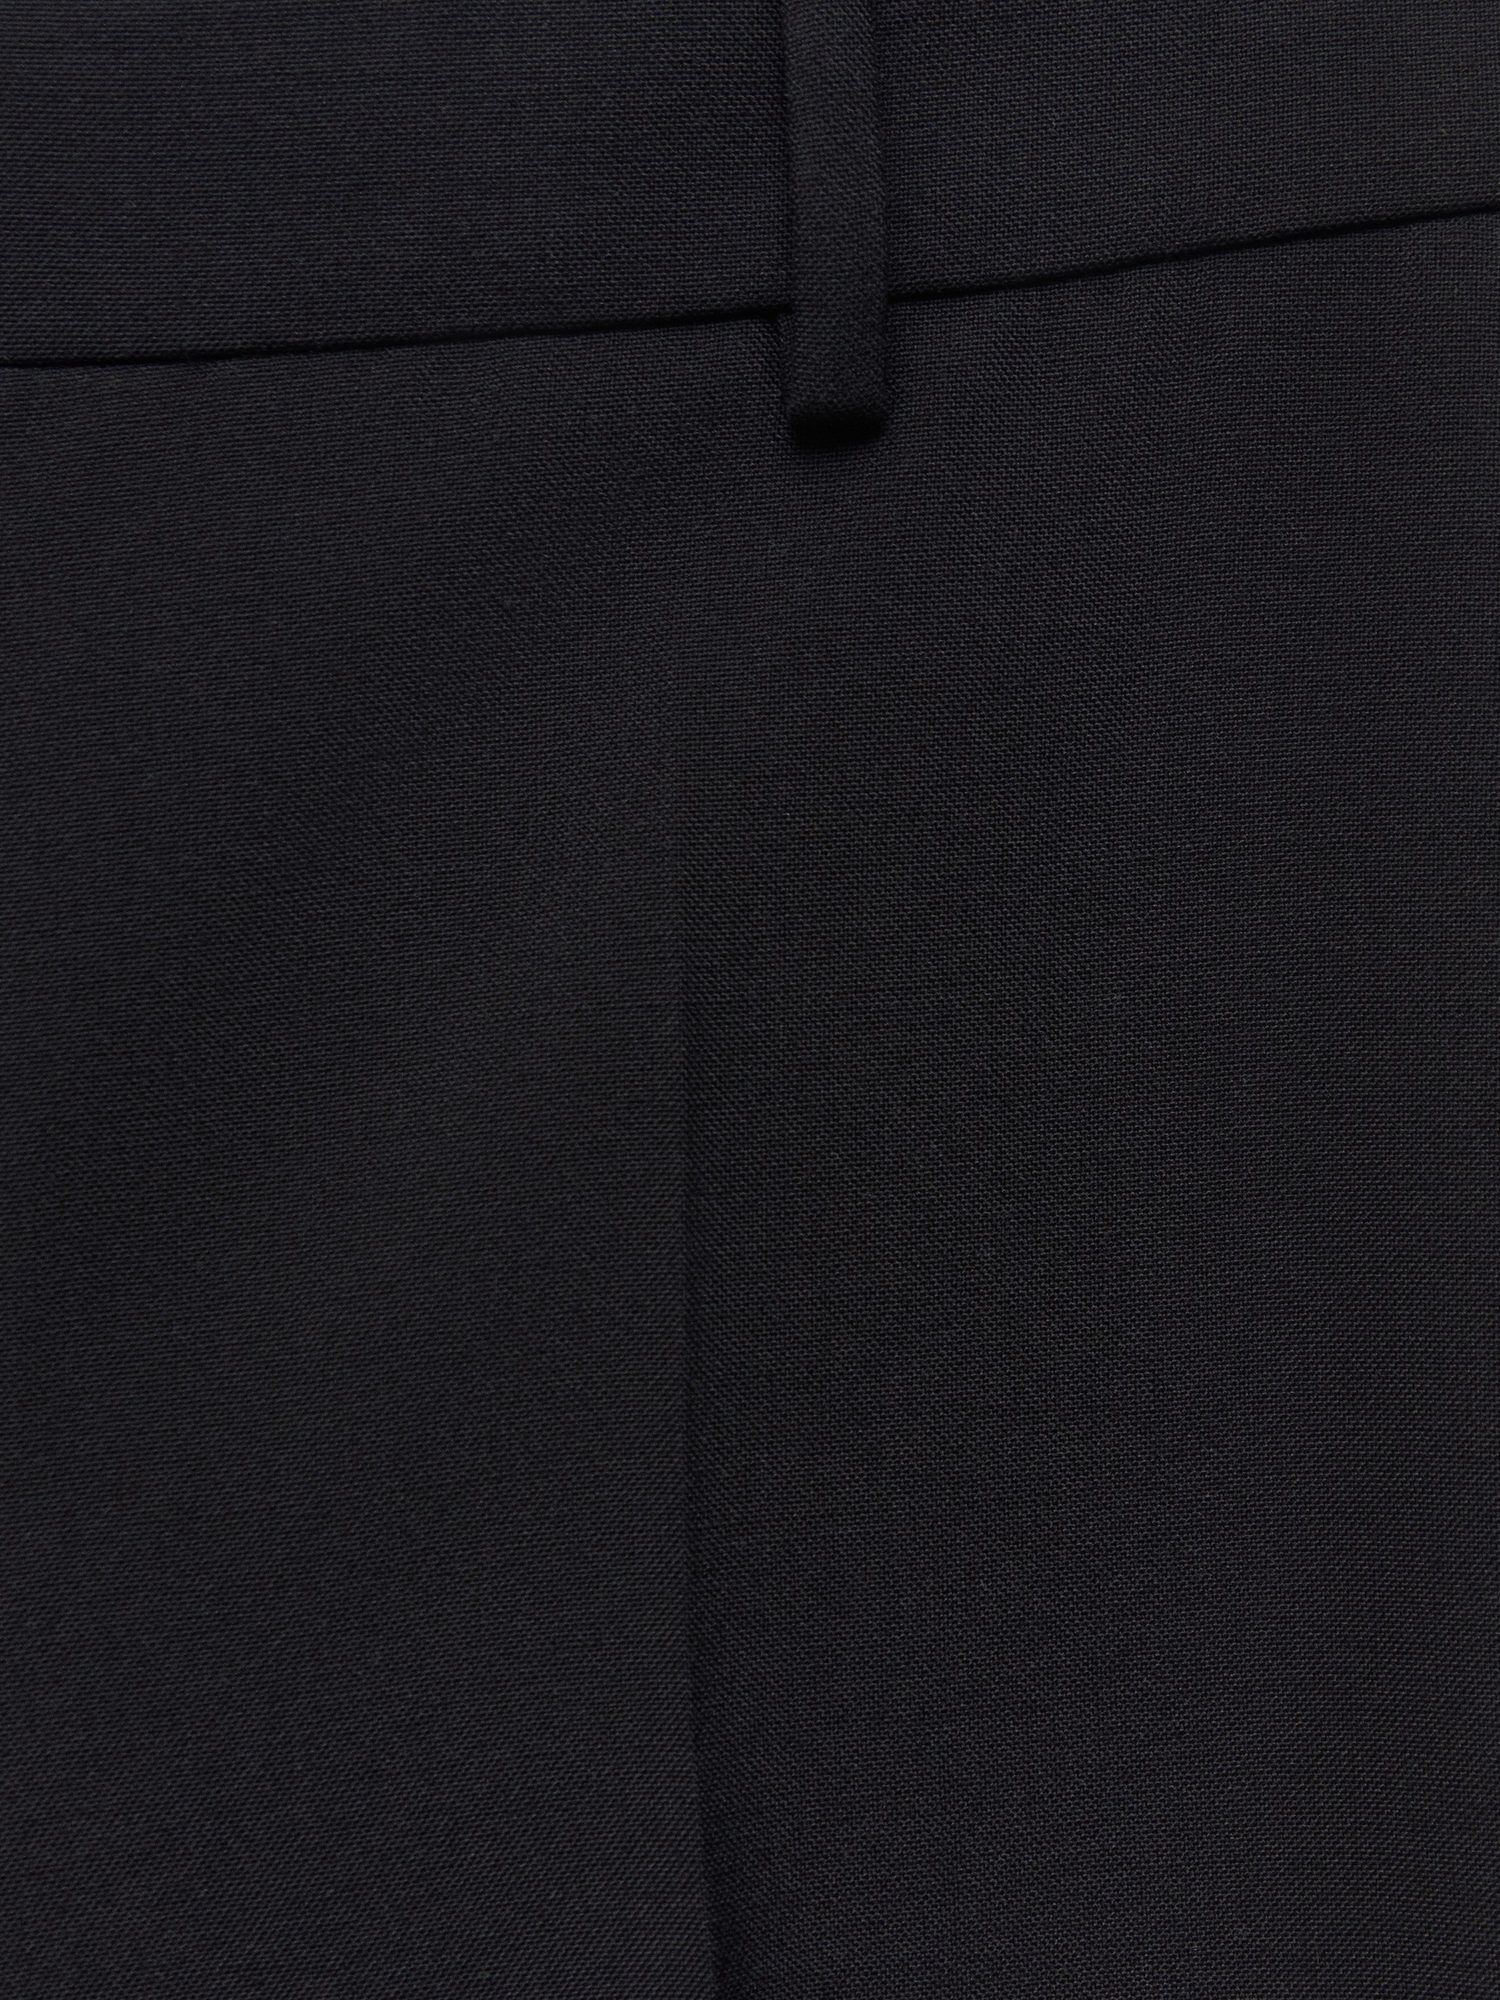 Mango Jordan Wool Blend Suit Trousers, Black at John Lewis & Partners